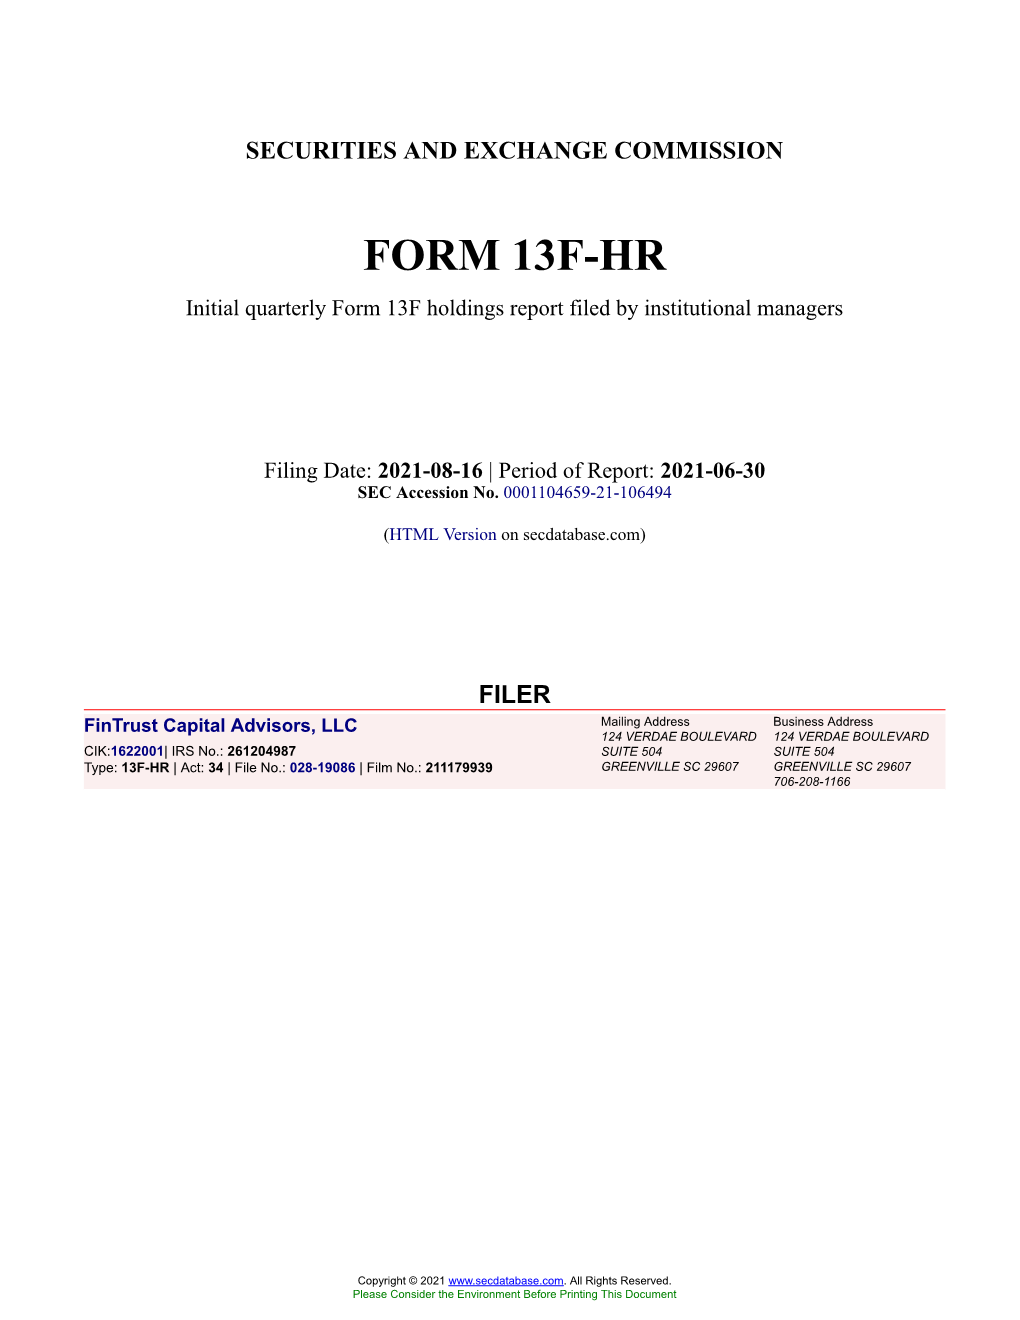 Fintrust Capital Advisors, LLC Form 13F-HR Filed 2021-08-16